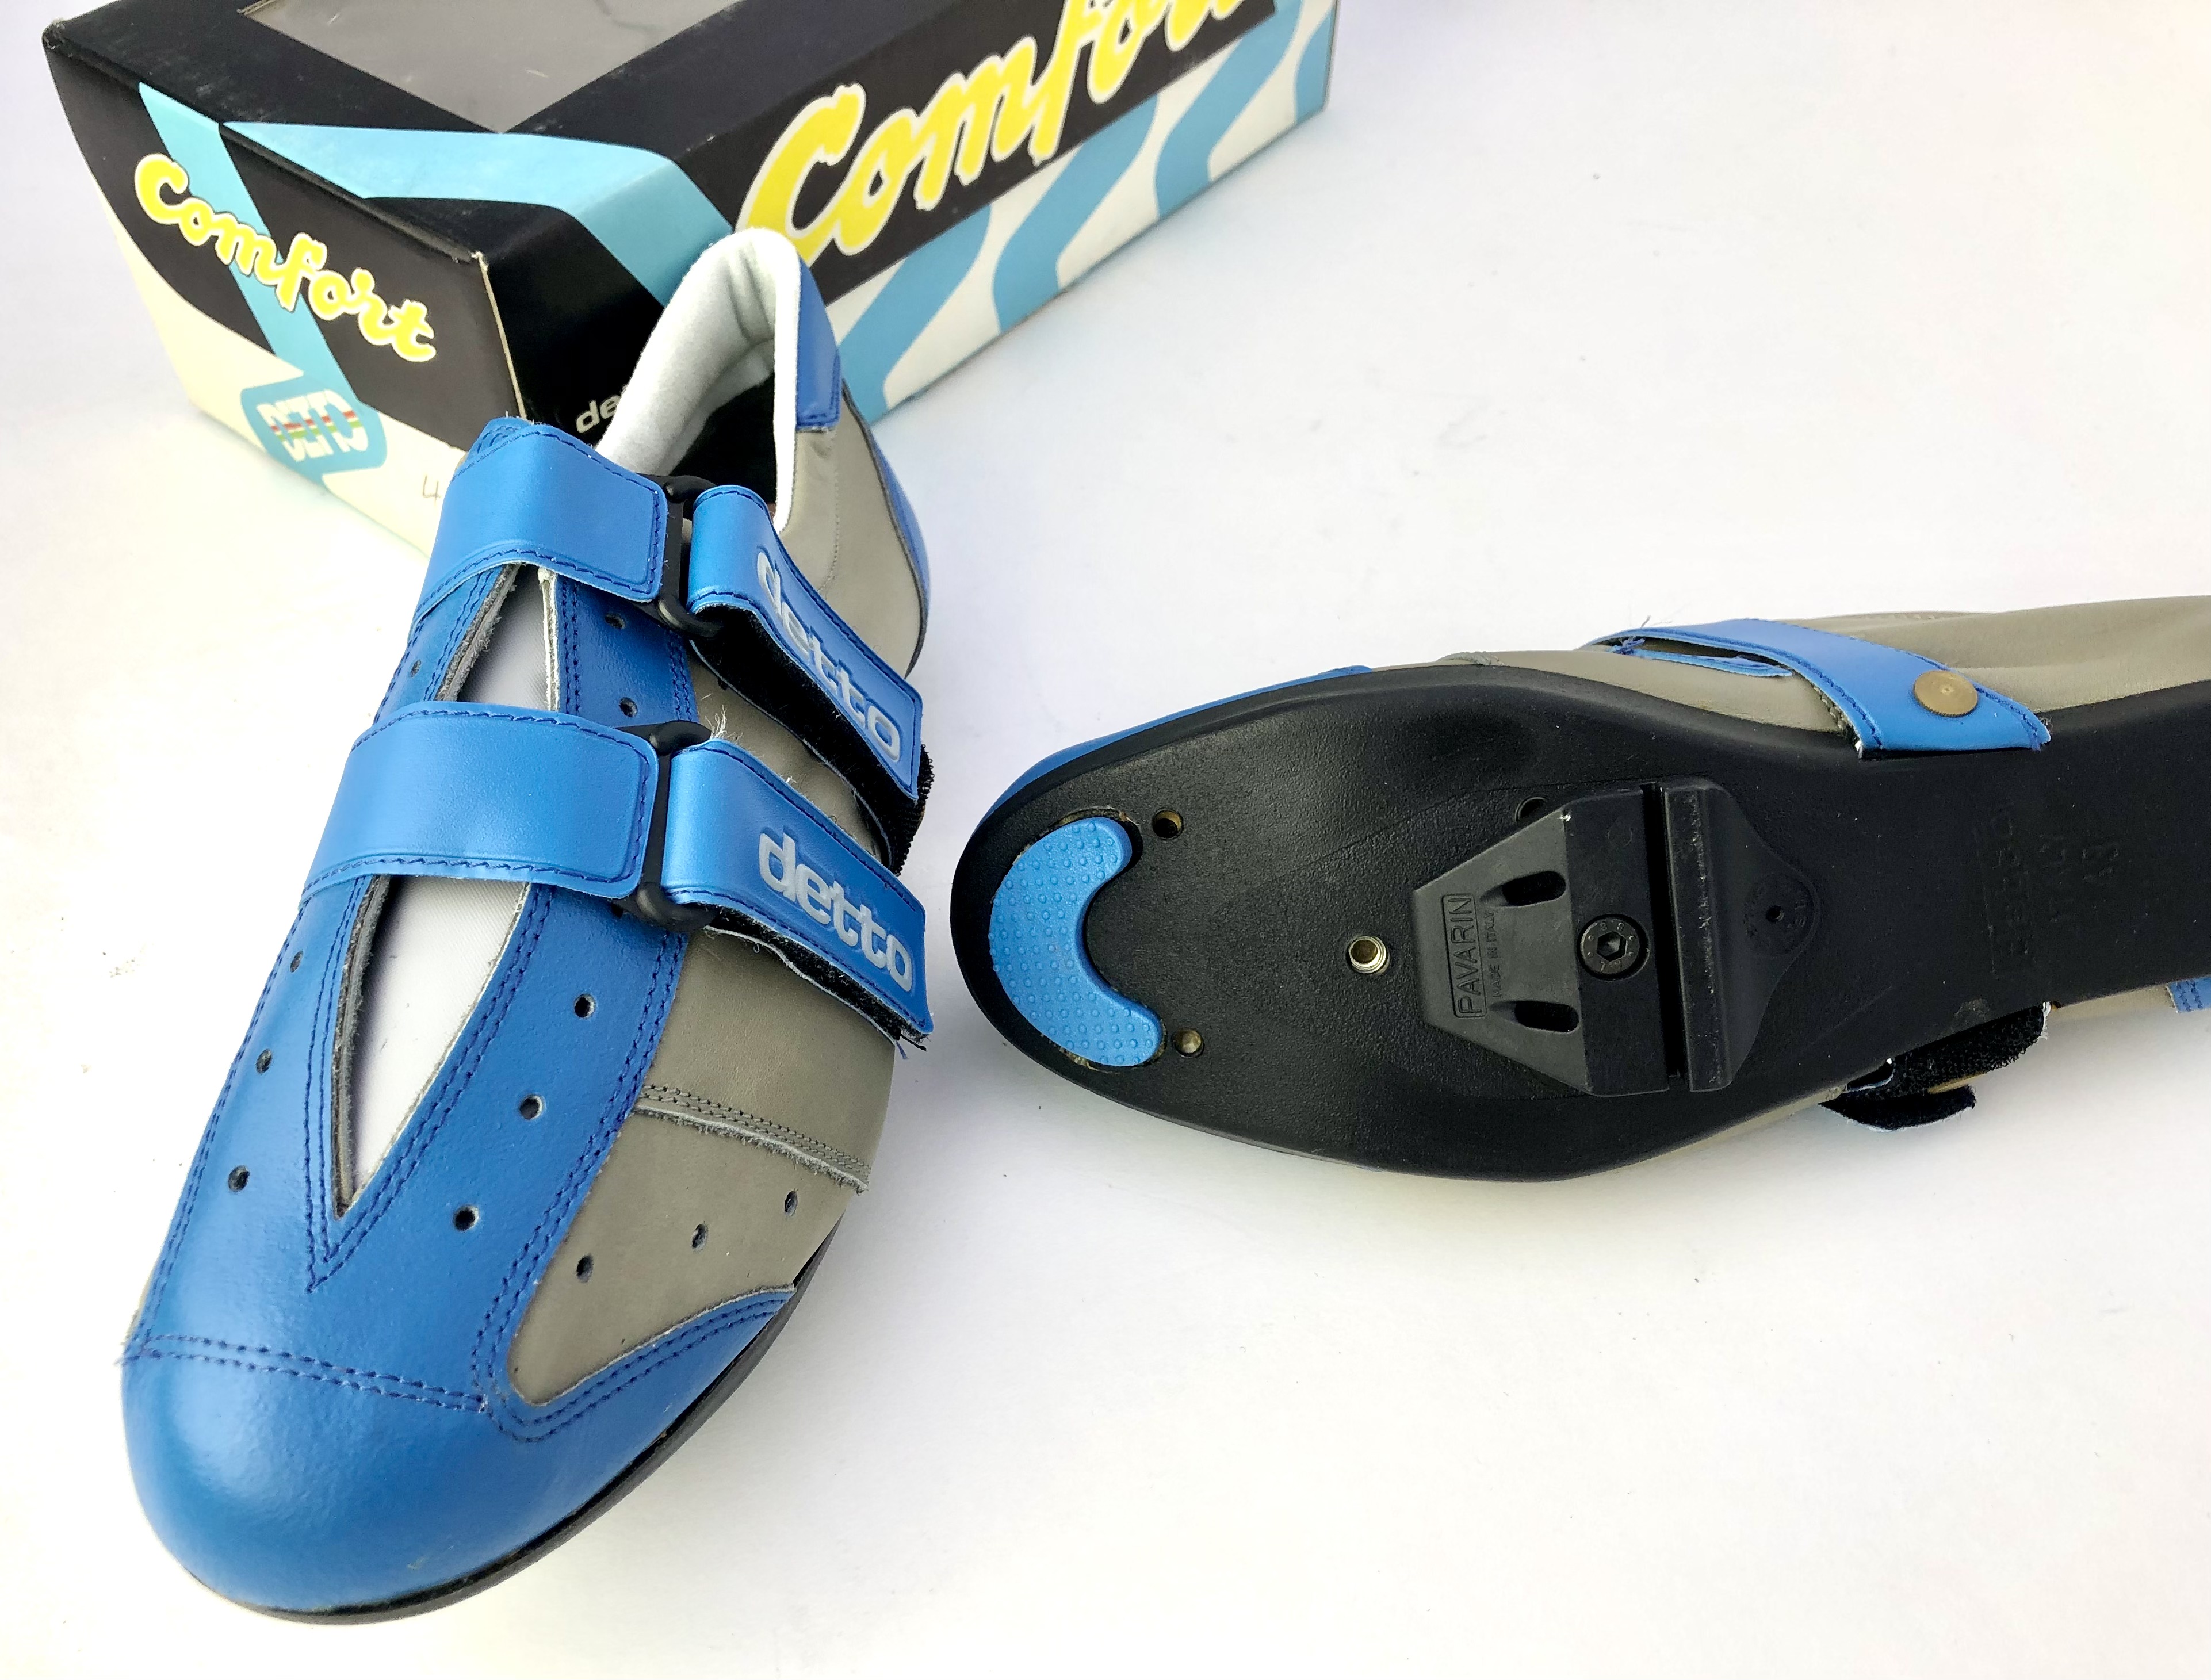 NOS Vintage Detto Pietro Mod. 230 Comfort Blu Cycling Shoes Size 41